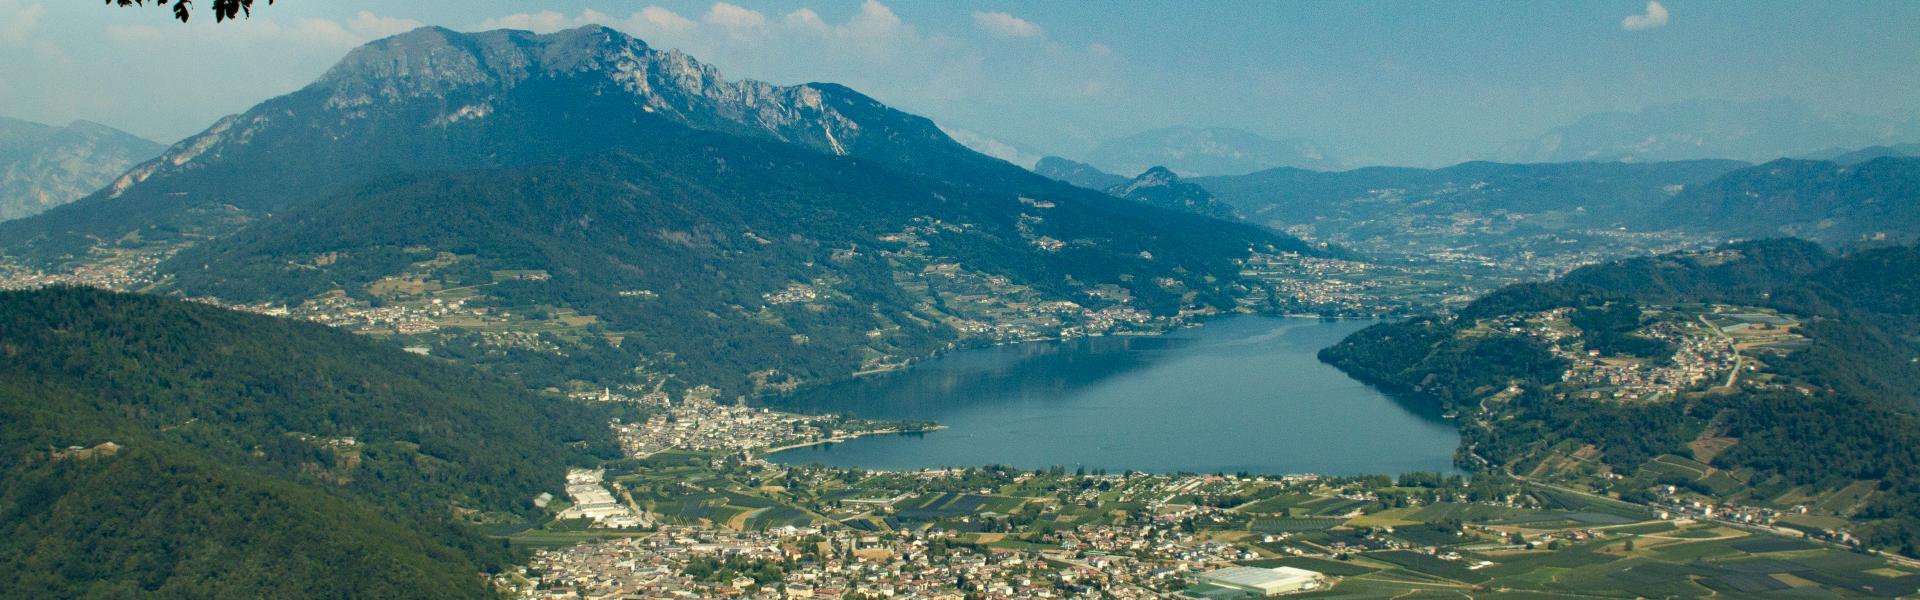 Caldonazzo Aerial View